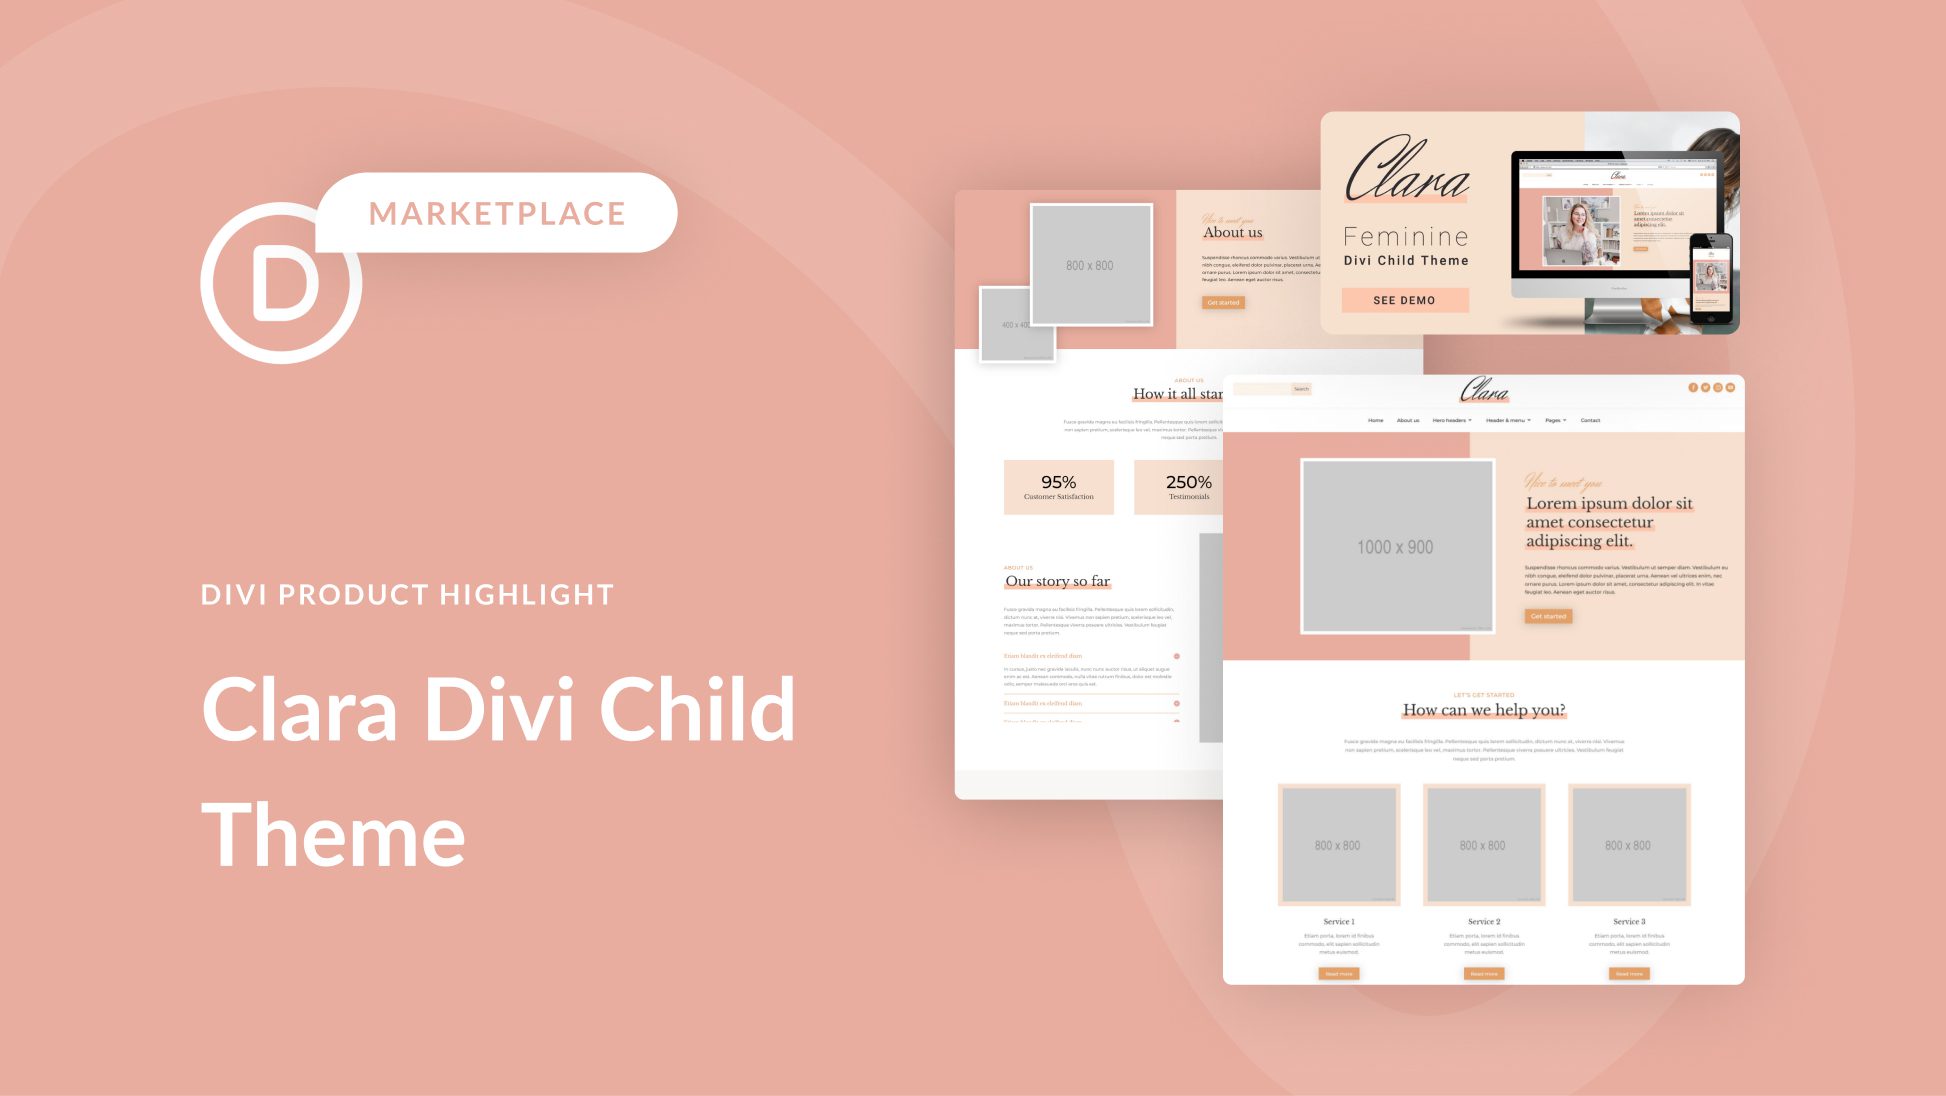 Divi Product Highlight: Clara Divi Child Theme